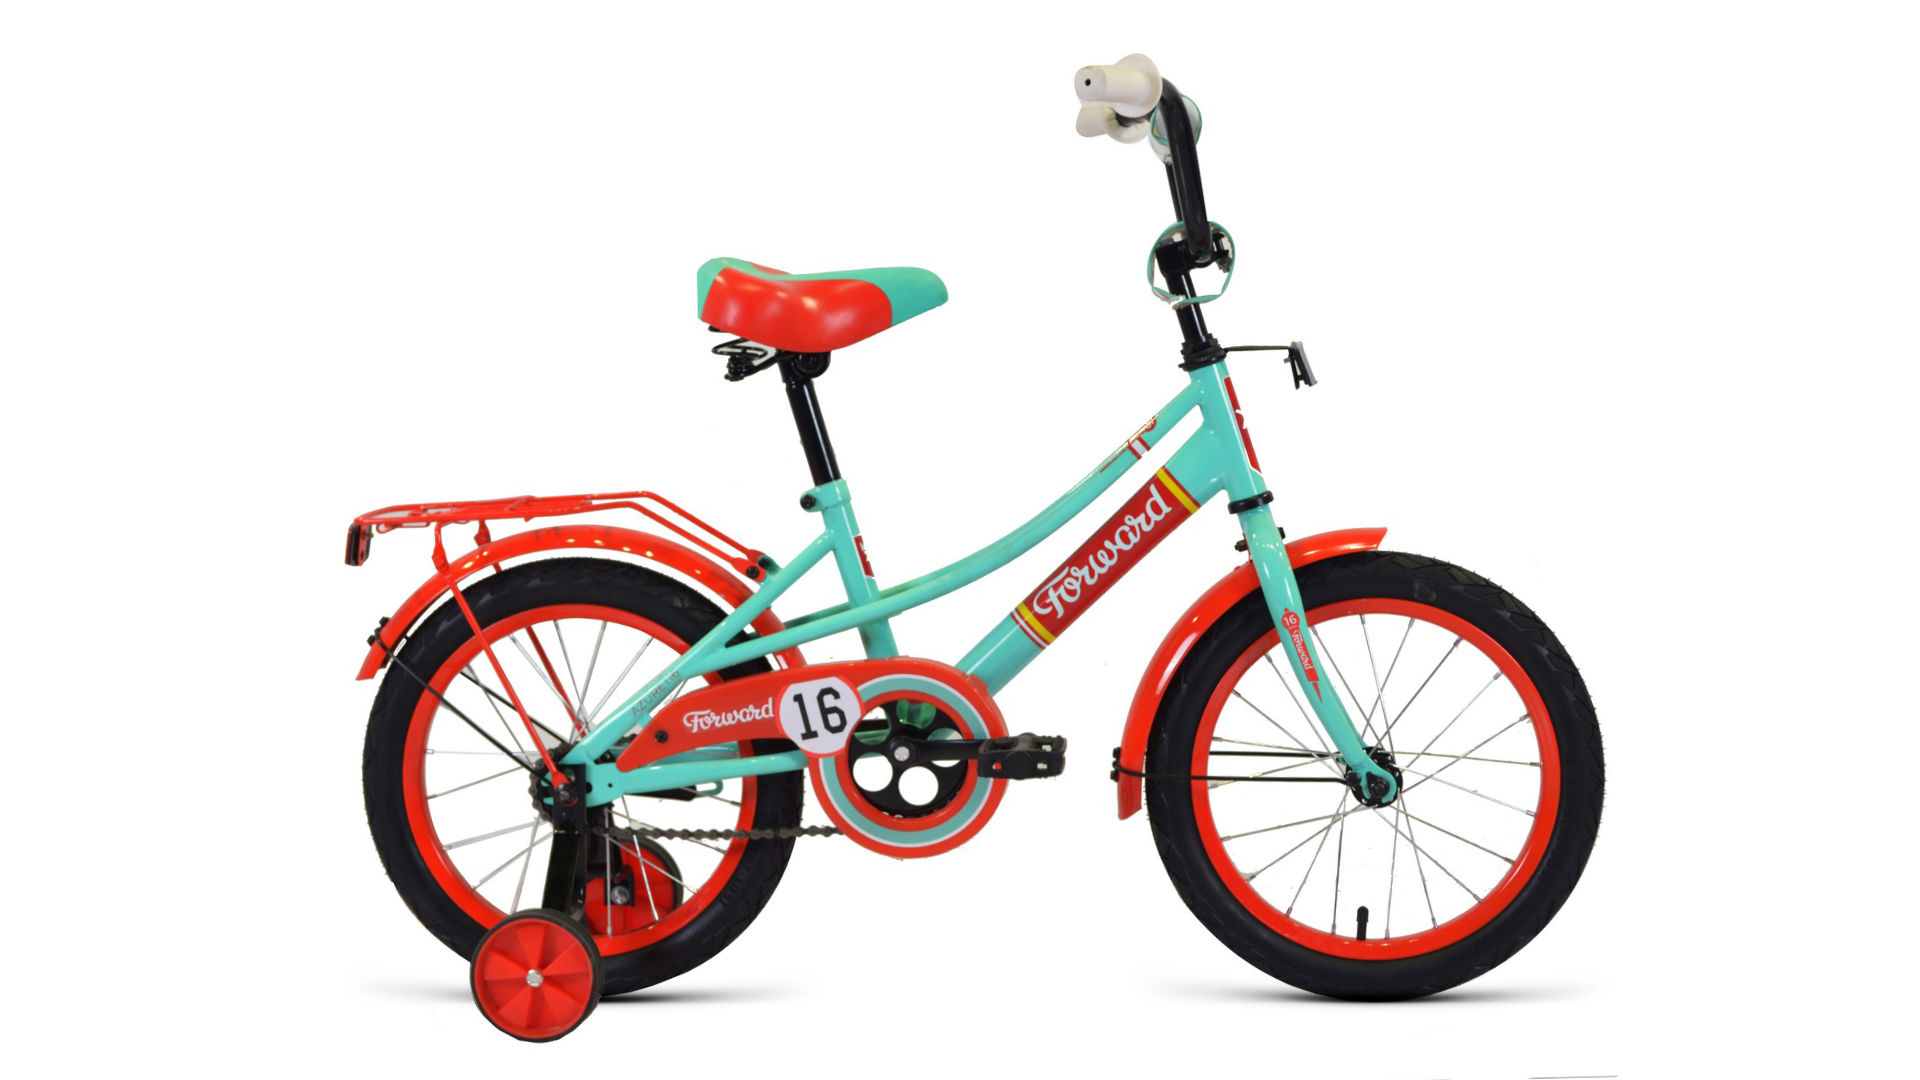 Велосипед Forward Azure 16 2021 Зеленый/красный 1BKW1K1C1027 велосипед 16 forward funky 20 21 г красный голубой 1bkw1k1c1034 039179 002